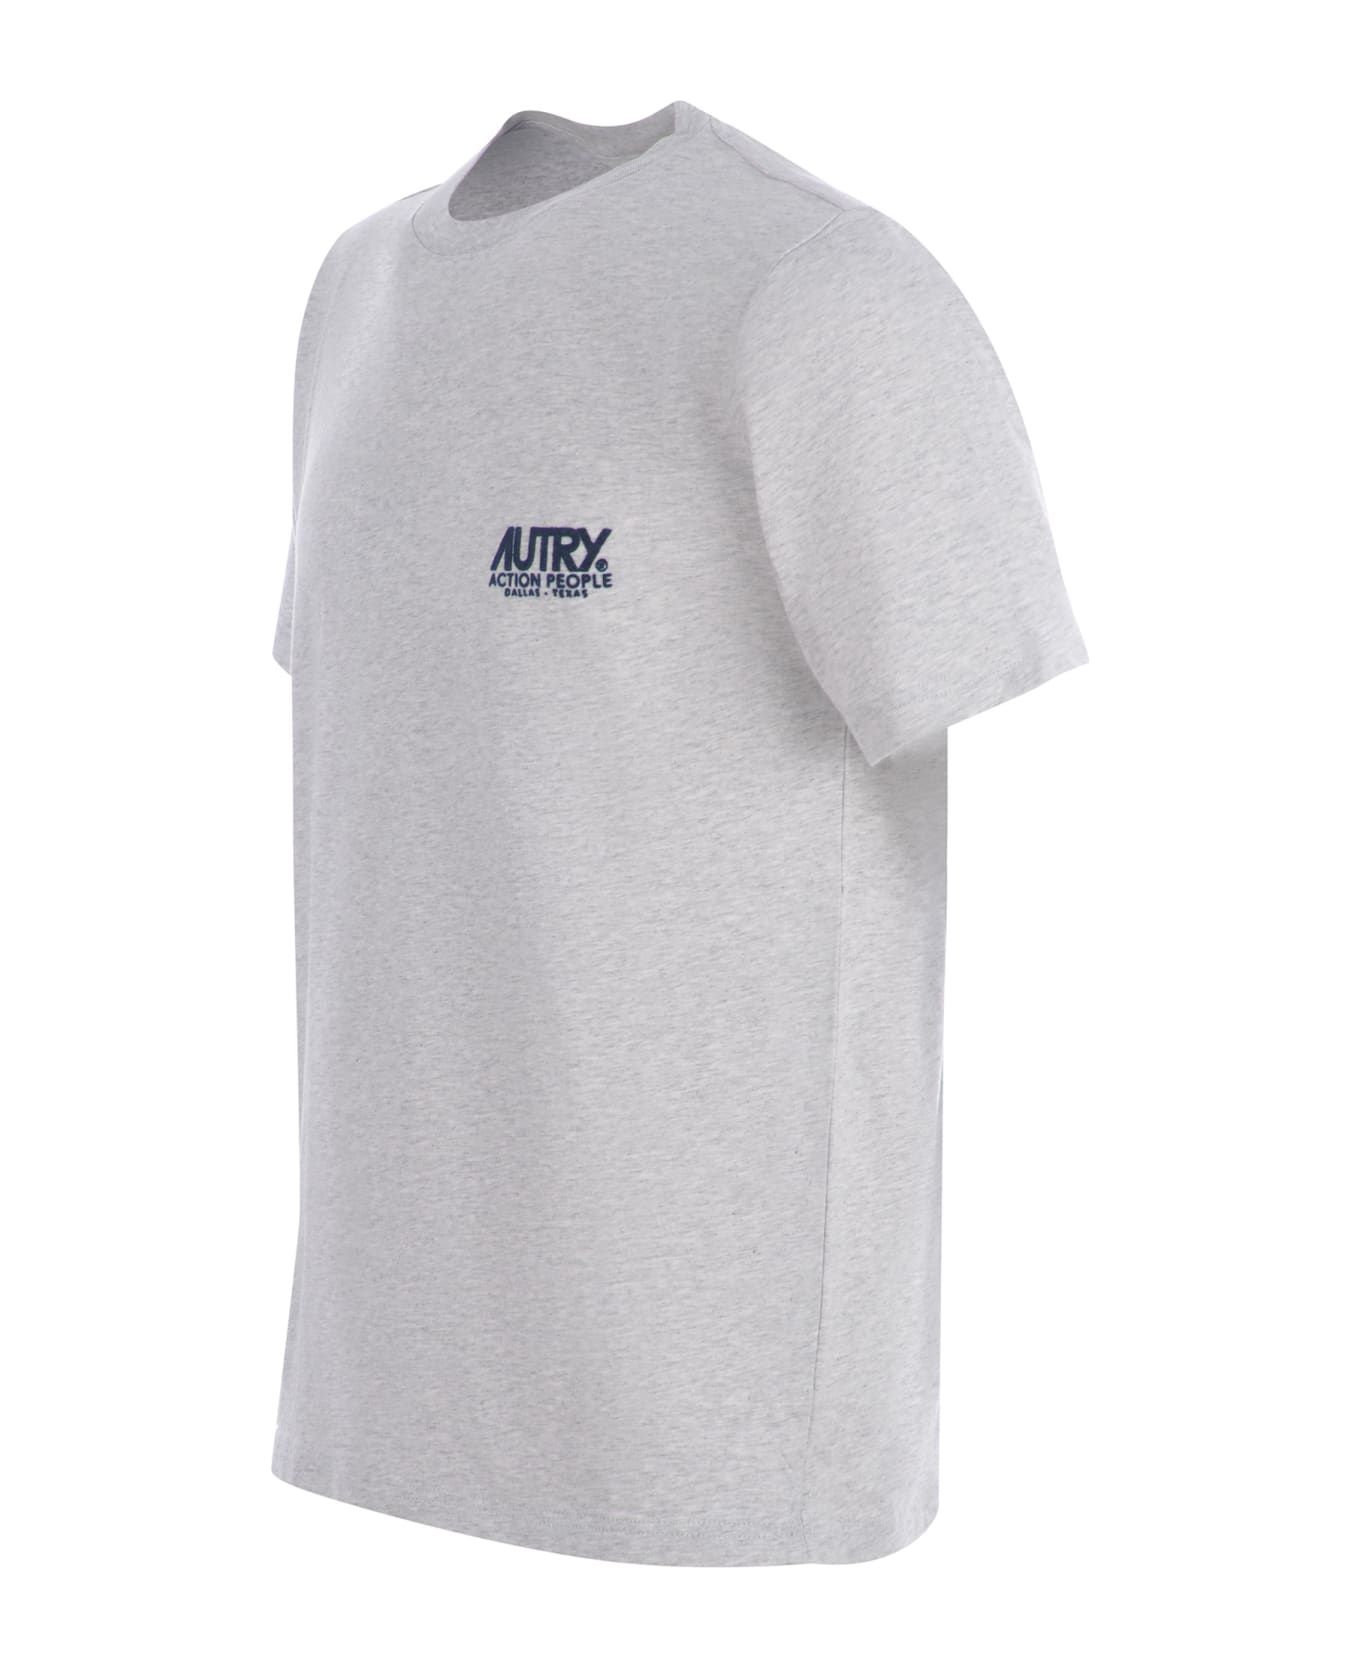 Autry T-shirt Autry In Cotton - Grigio シャツ